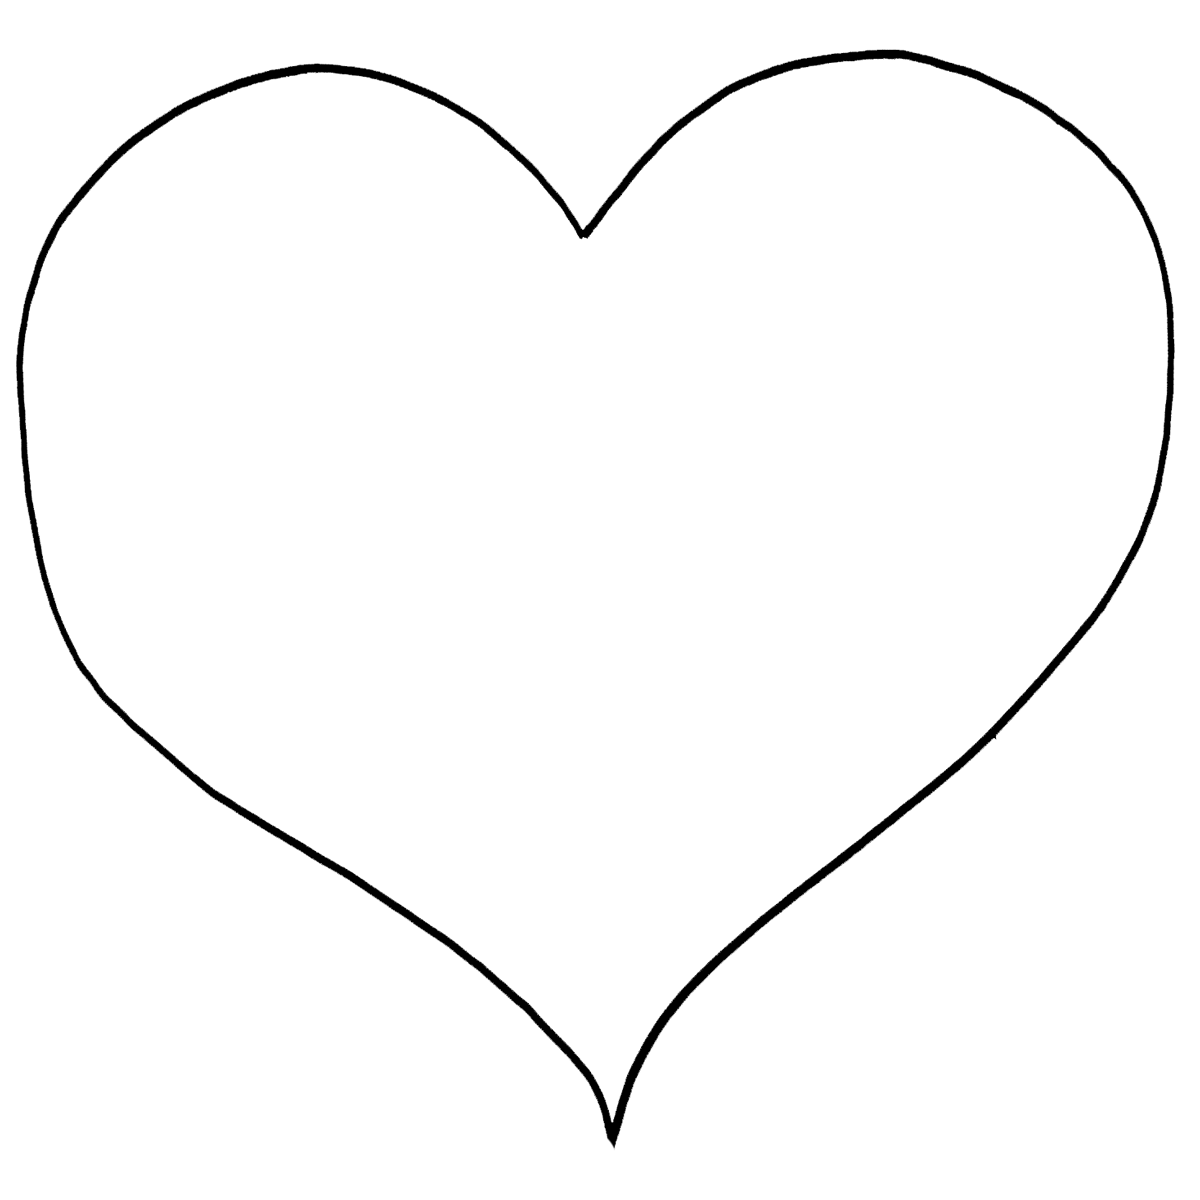 free printable colored hearts free printable heart coloring pages for kids colored printable hearts free 